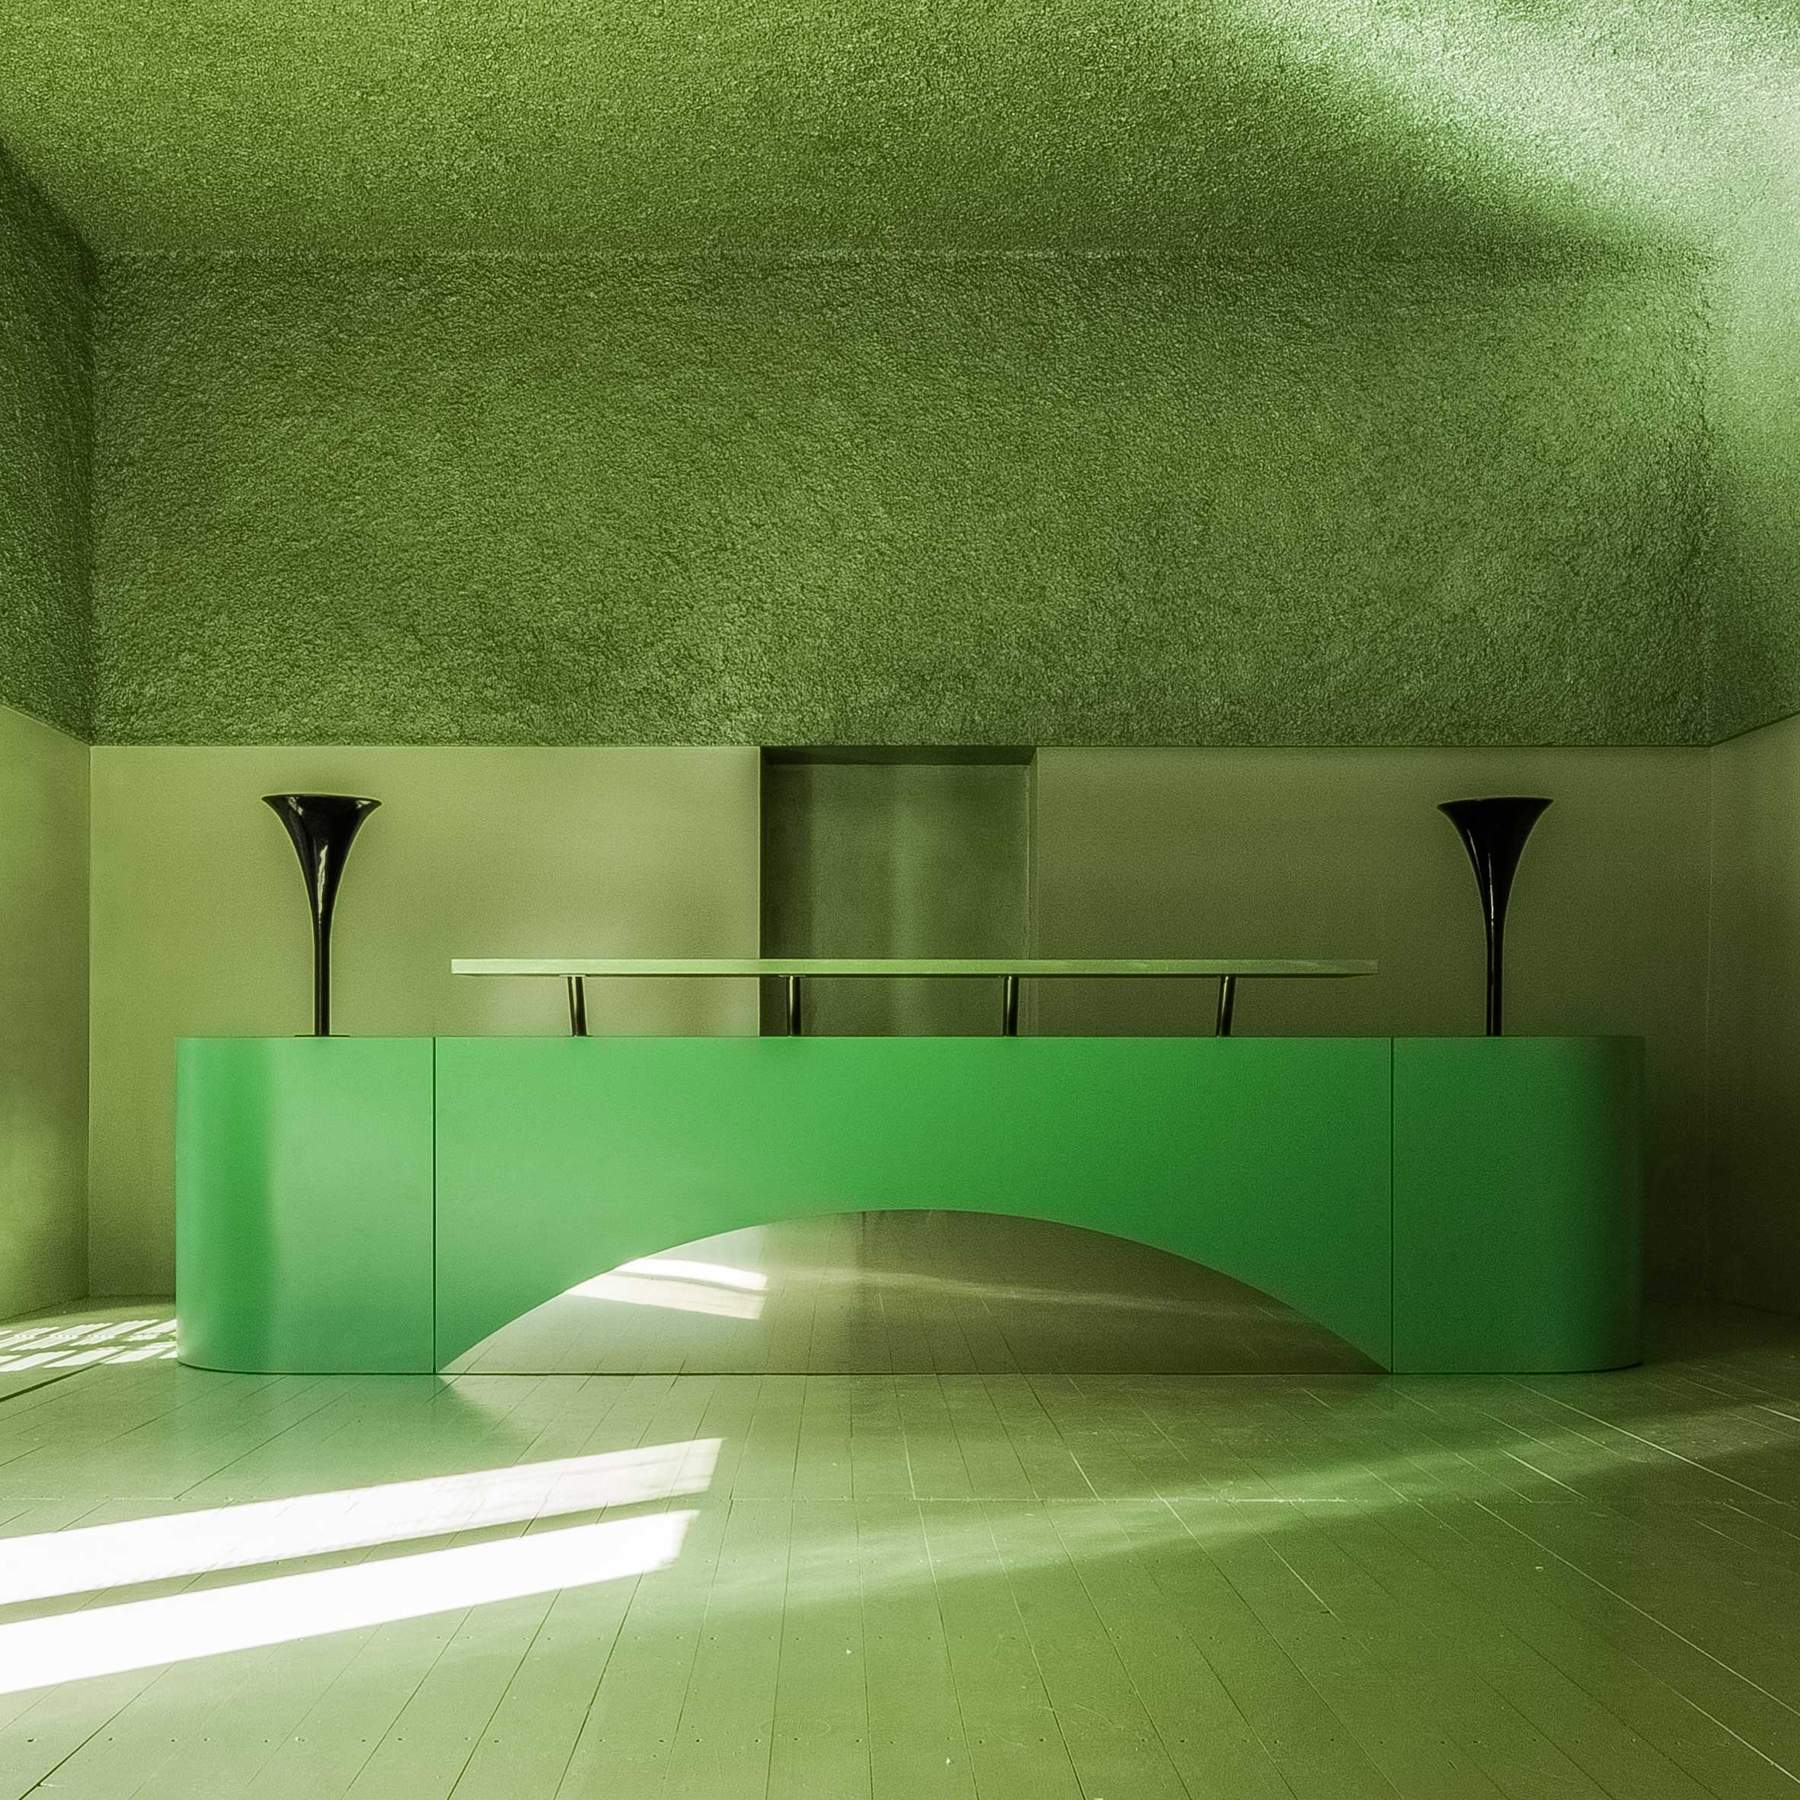 crepuscular-green-antonino-cardillo-interiors-_dezeen_sq-2.jpg